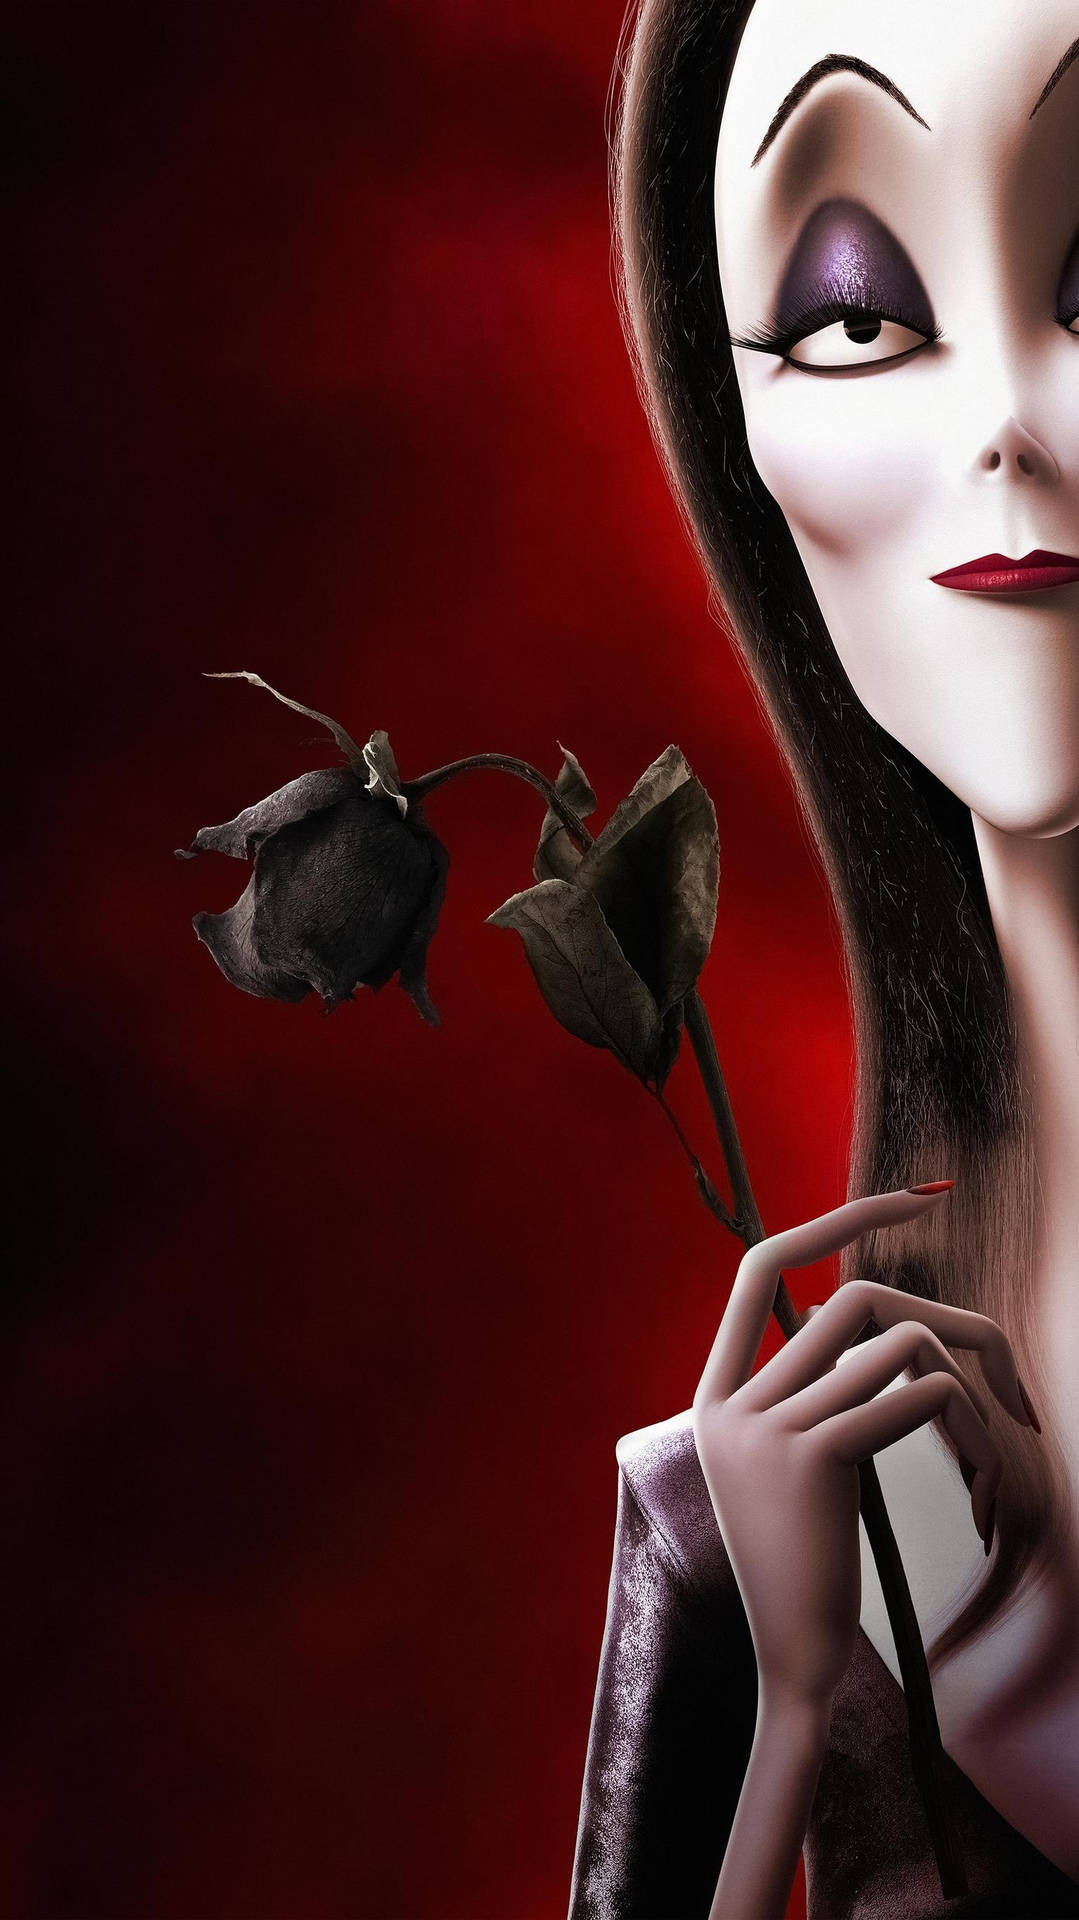 Morticiahält Eine Getrocknete Rose - Die Addams Family 2 Wallpaper